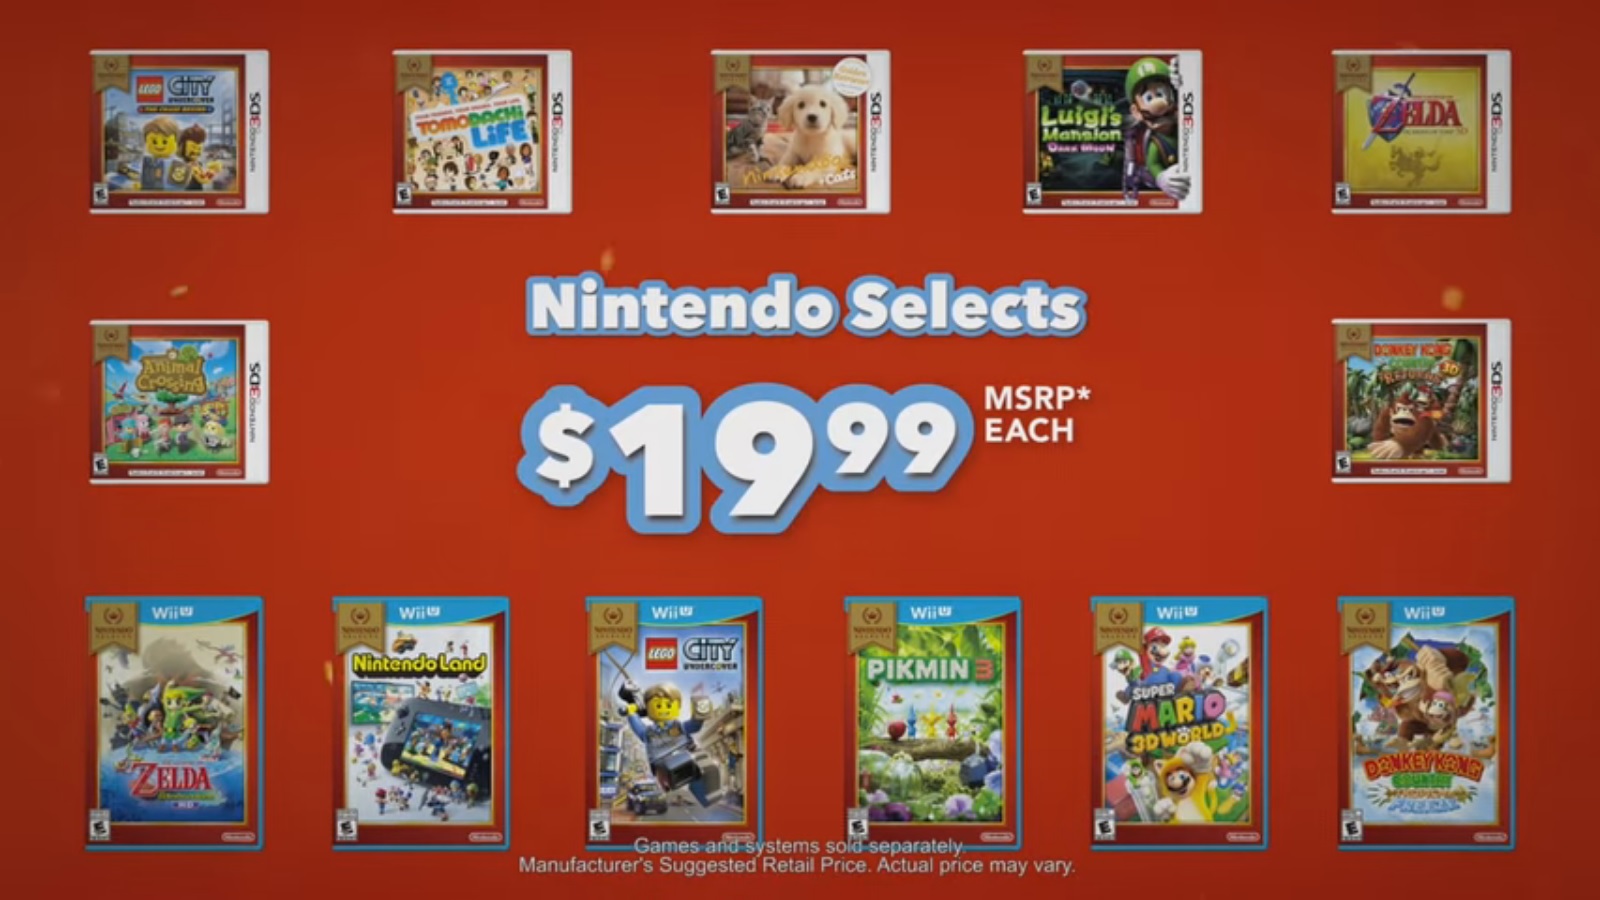 Nintendo Land Nintendo Selects (Nintendo Wii U, 2016) for sale online